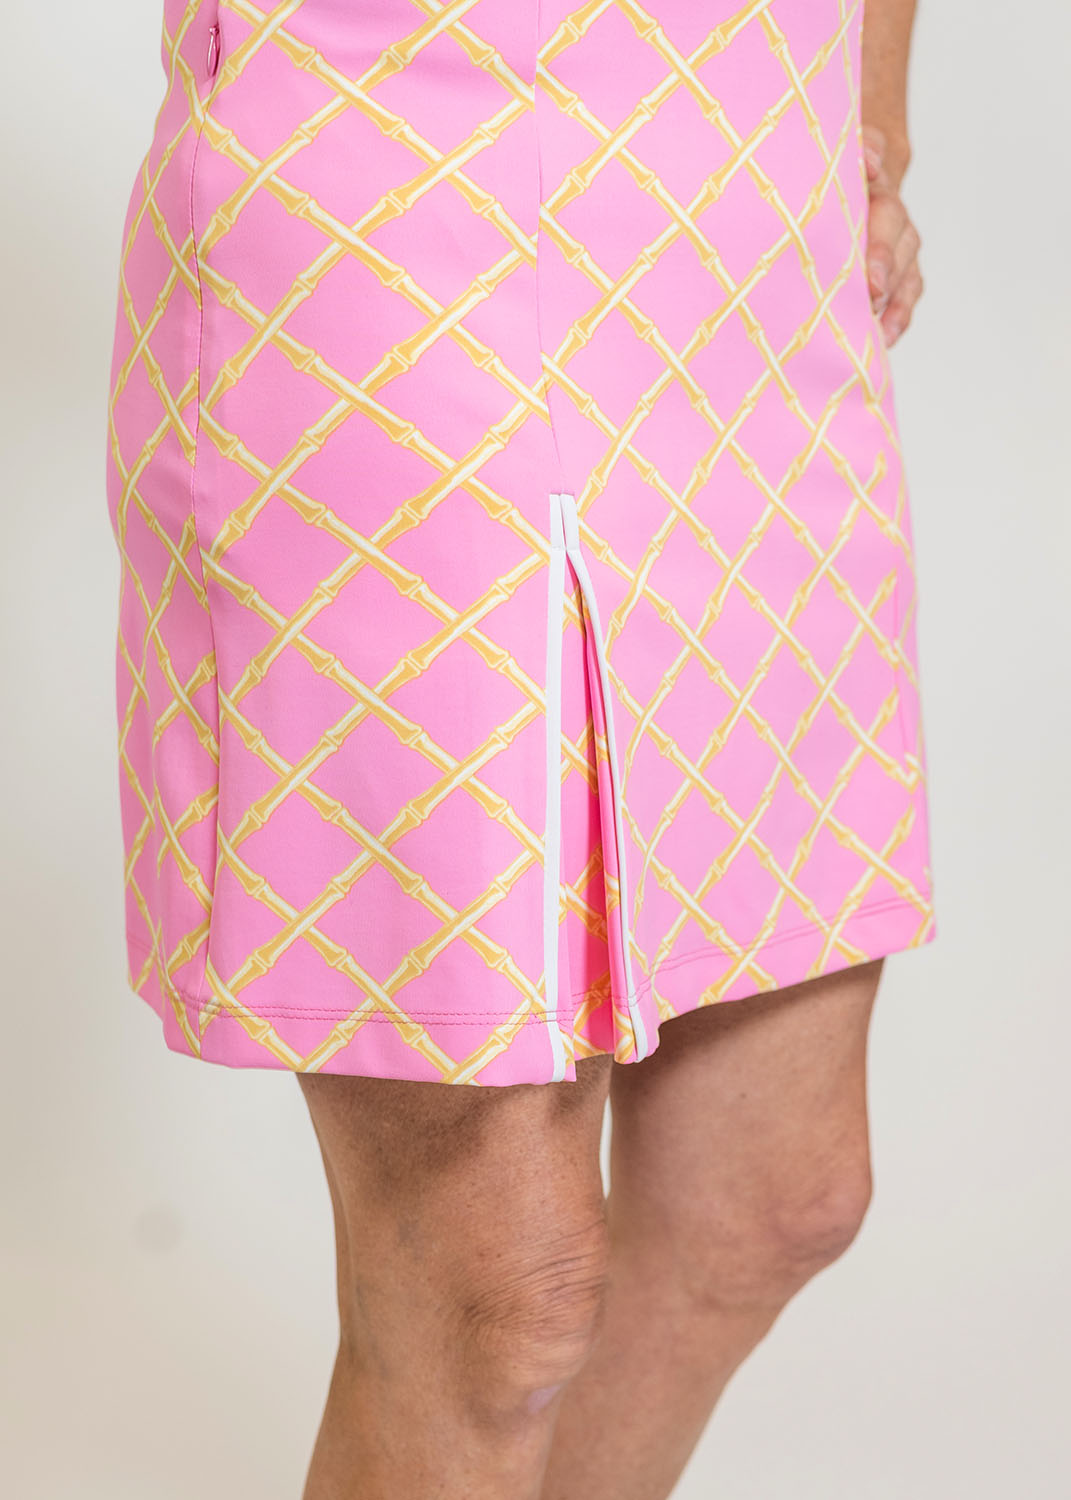 Sport Dress - Bamboo Lattice Pink/Tan